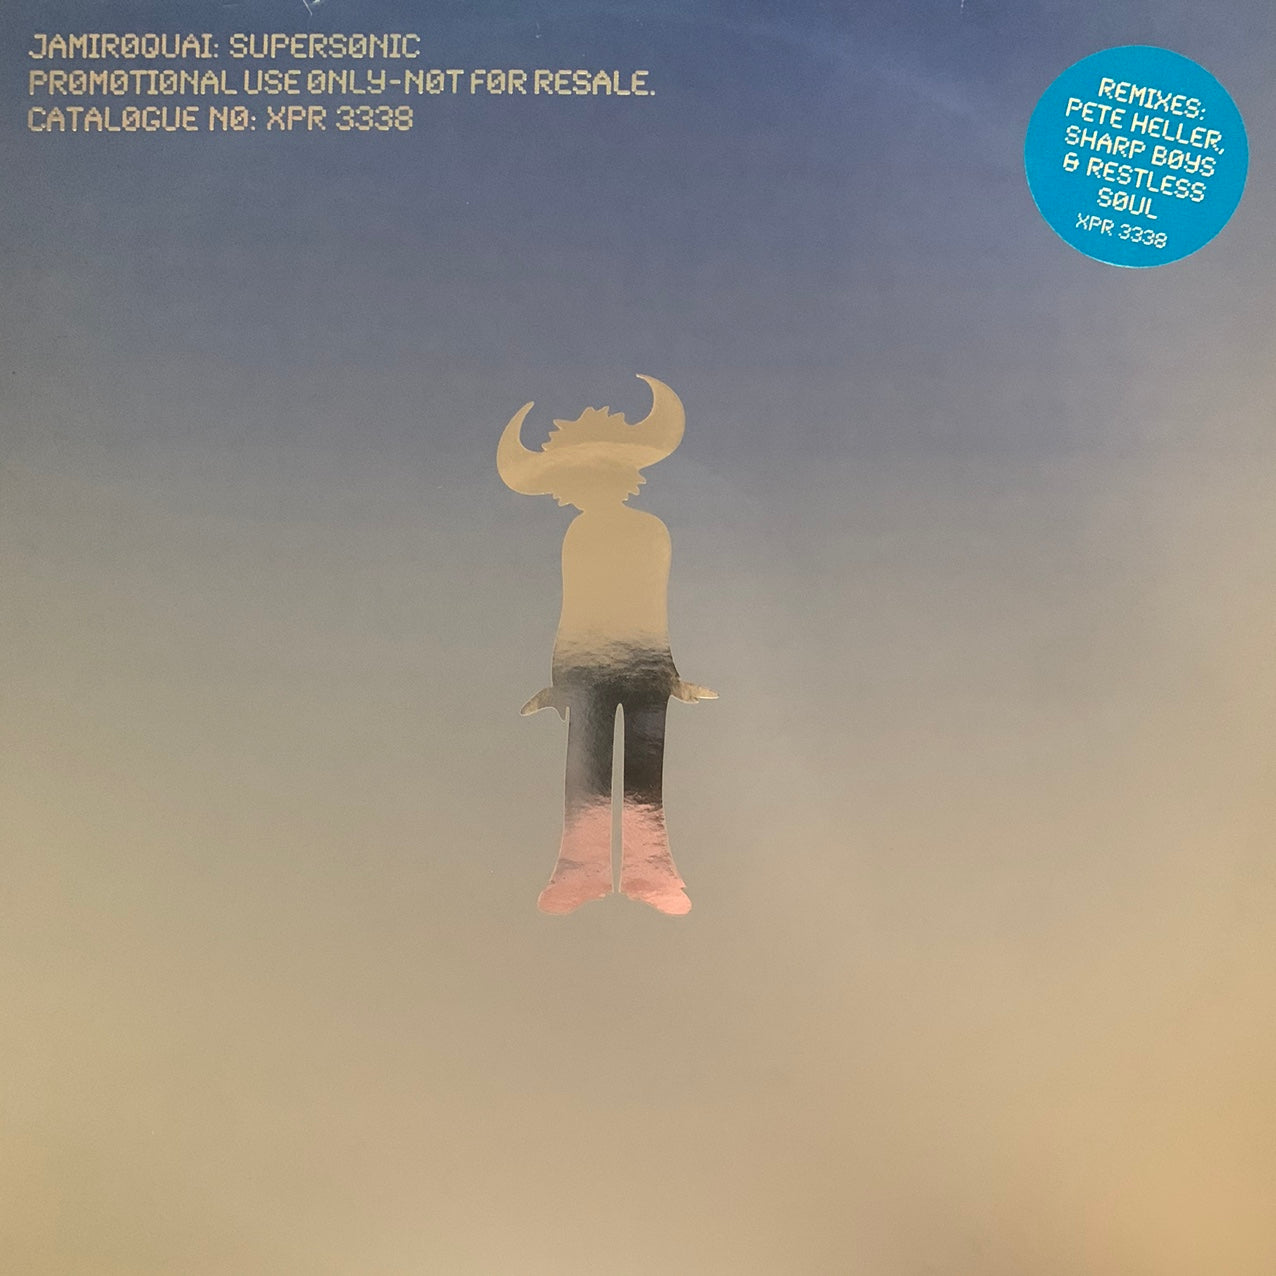 Jamiroquai “Supersonic” 2 X 12inch Vinyl Double Pack Pete Heller, Sharp Boys Remixes 6 Version 12inch Vinyl